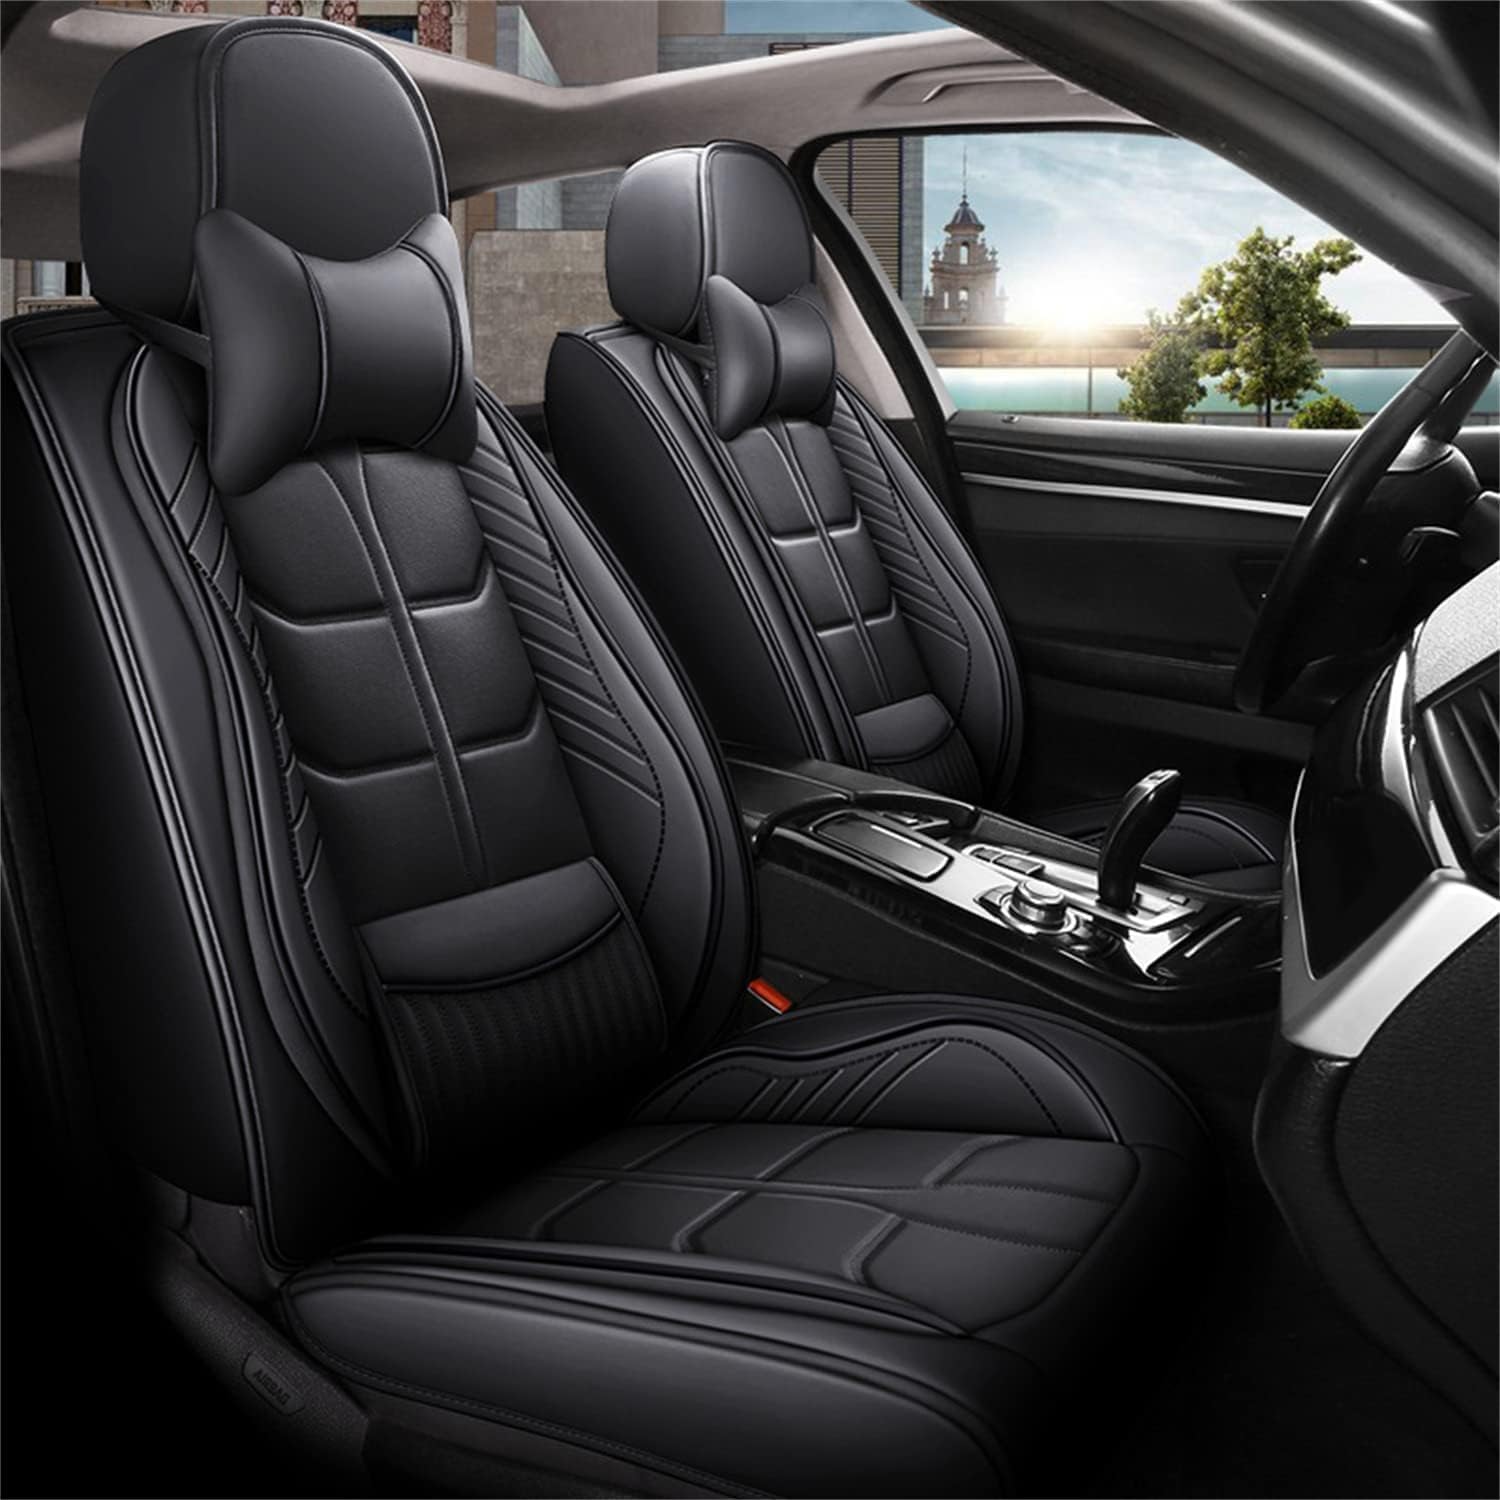 NPORT Auto PU-Leder Sitzbezüge Sets für Infiniti QX60 / JX 1. Generation 2011-2021, Komfortabler Dauerhafter Sitzbezug Vordersitze Rücksitze Autositzschoner,A/Black-Withpillow von NPORT